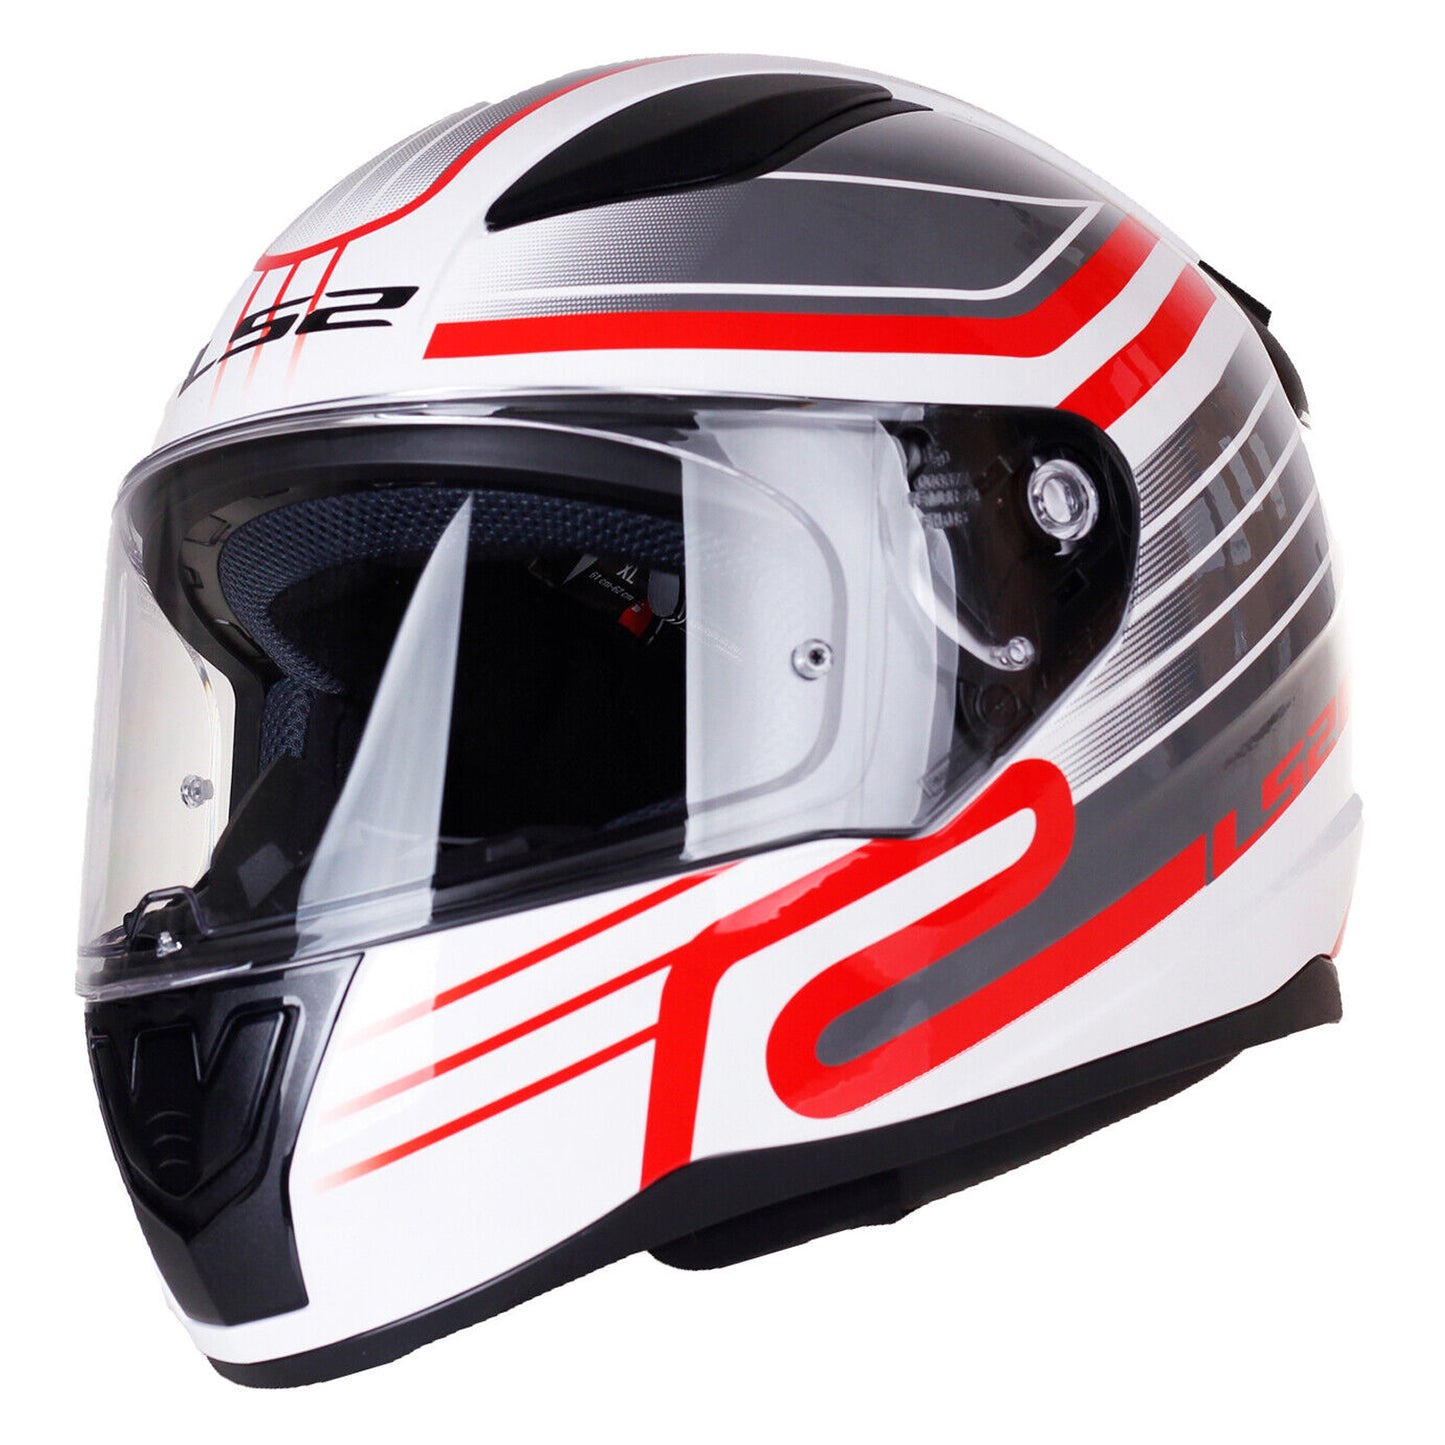 Riderwear | LS2 FF353 Rapid-II CIRCUIT Full Face Helmet